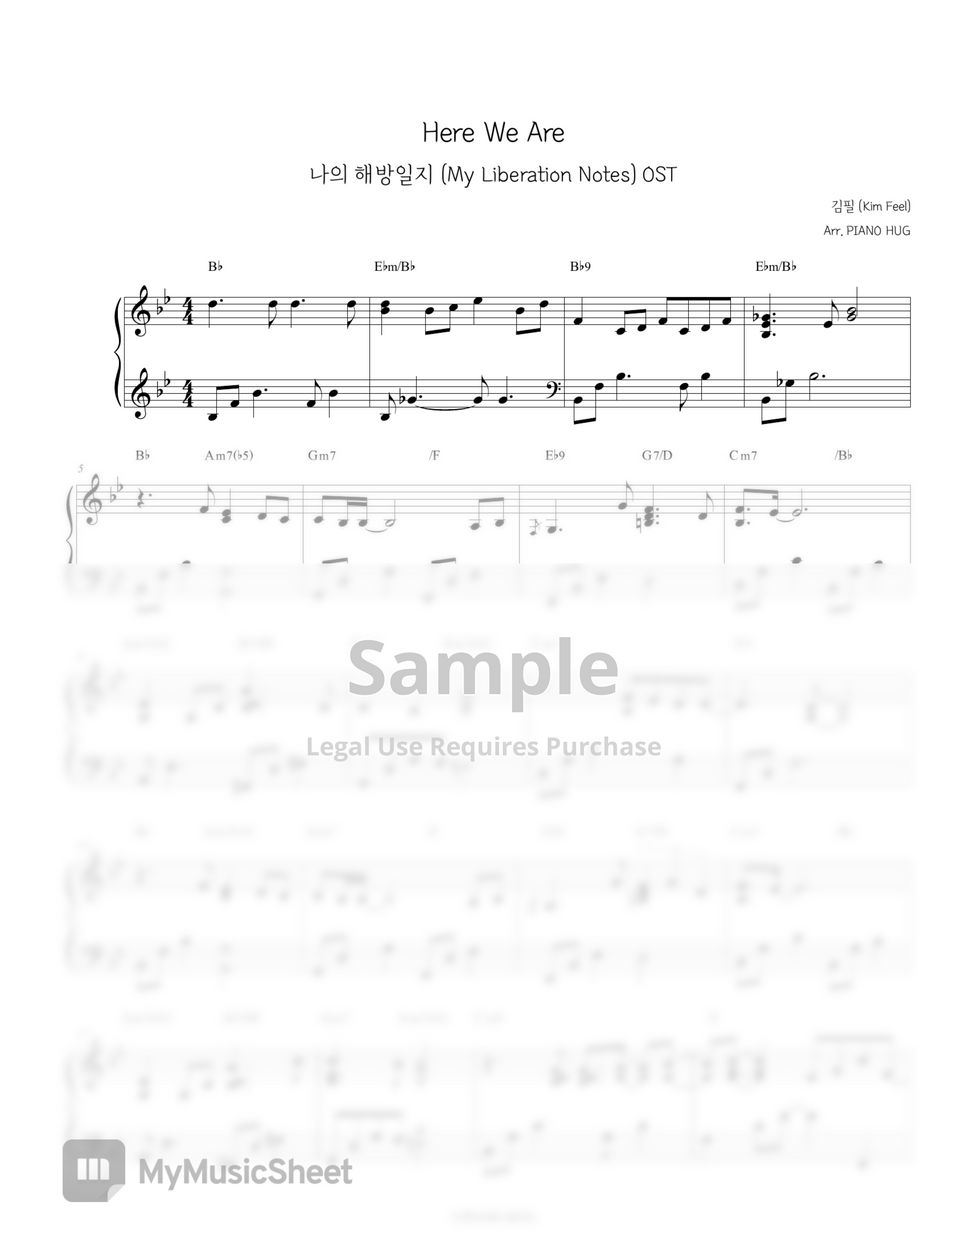 My Liberation Notes (나의 해방일지) OST - Kim Feel (김필) - Here We Are by Piano Hug